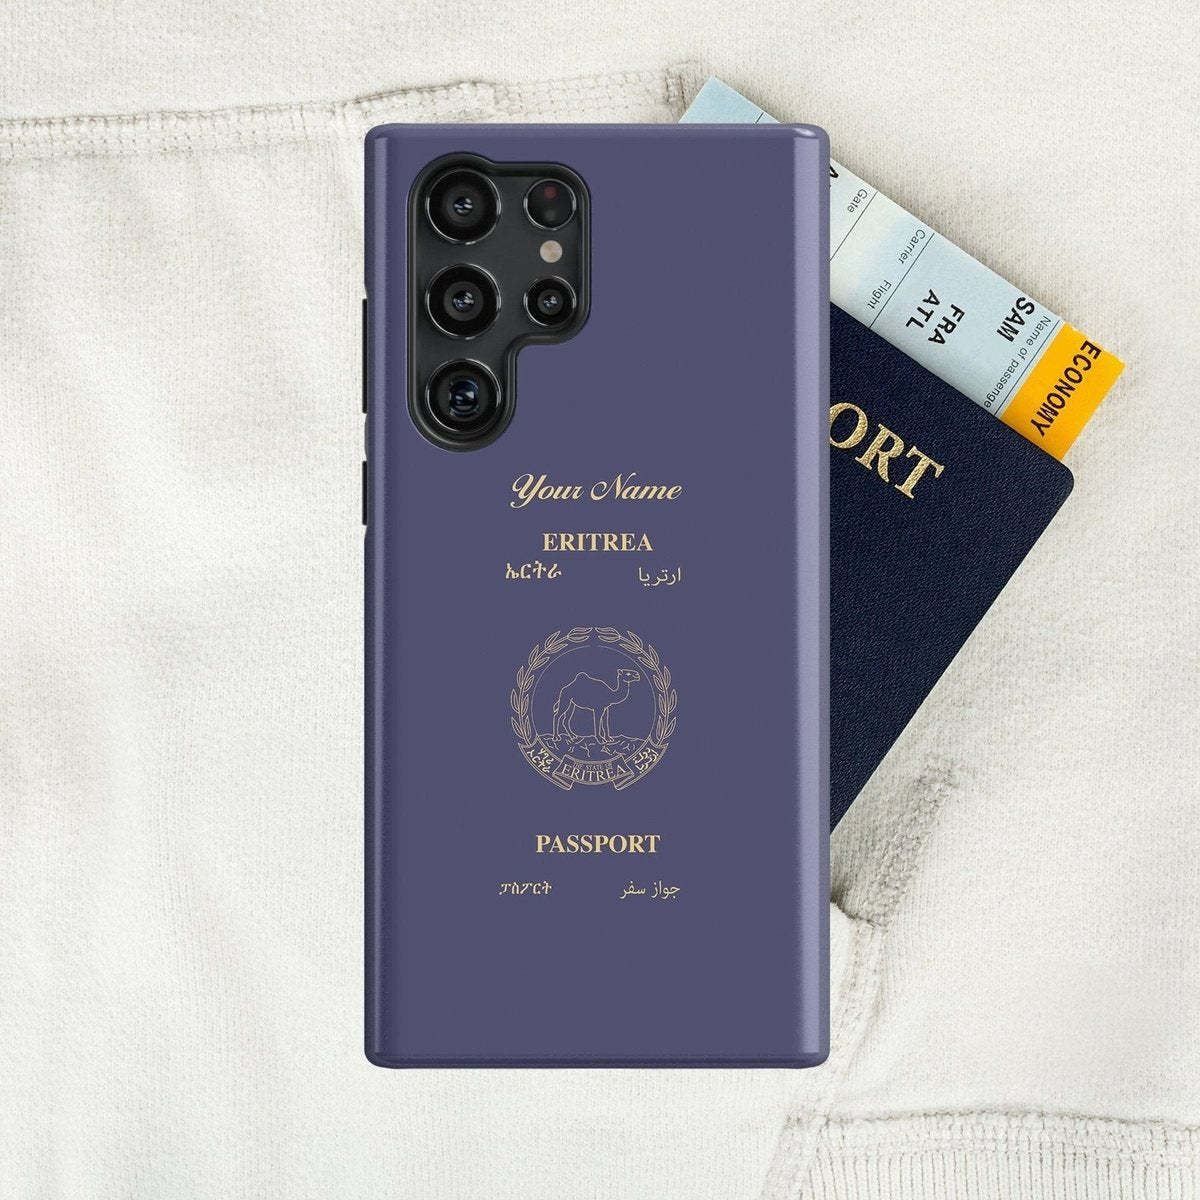 Eritrea Passport - Samsung Galaxy S Case